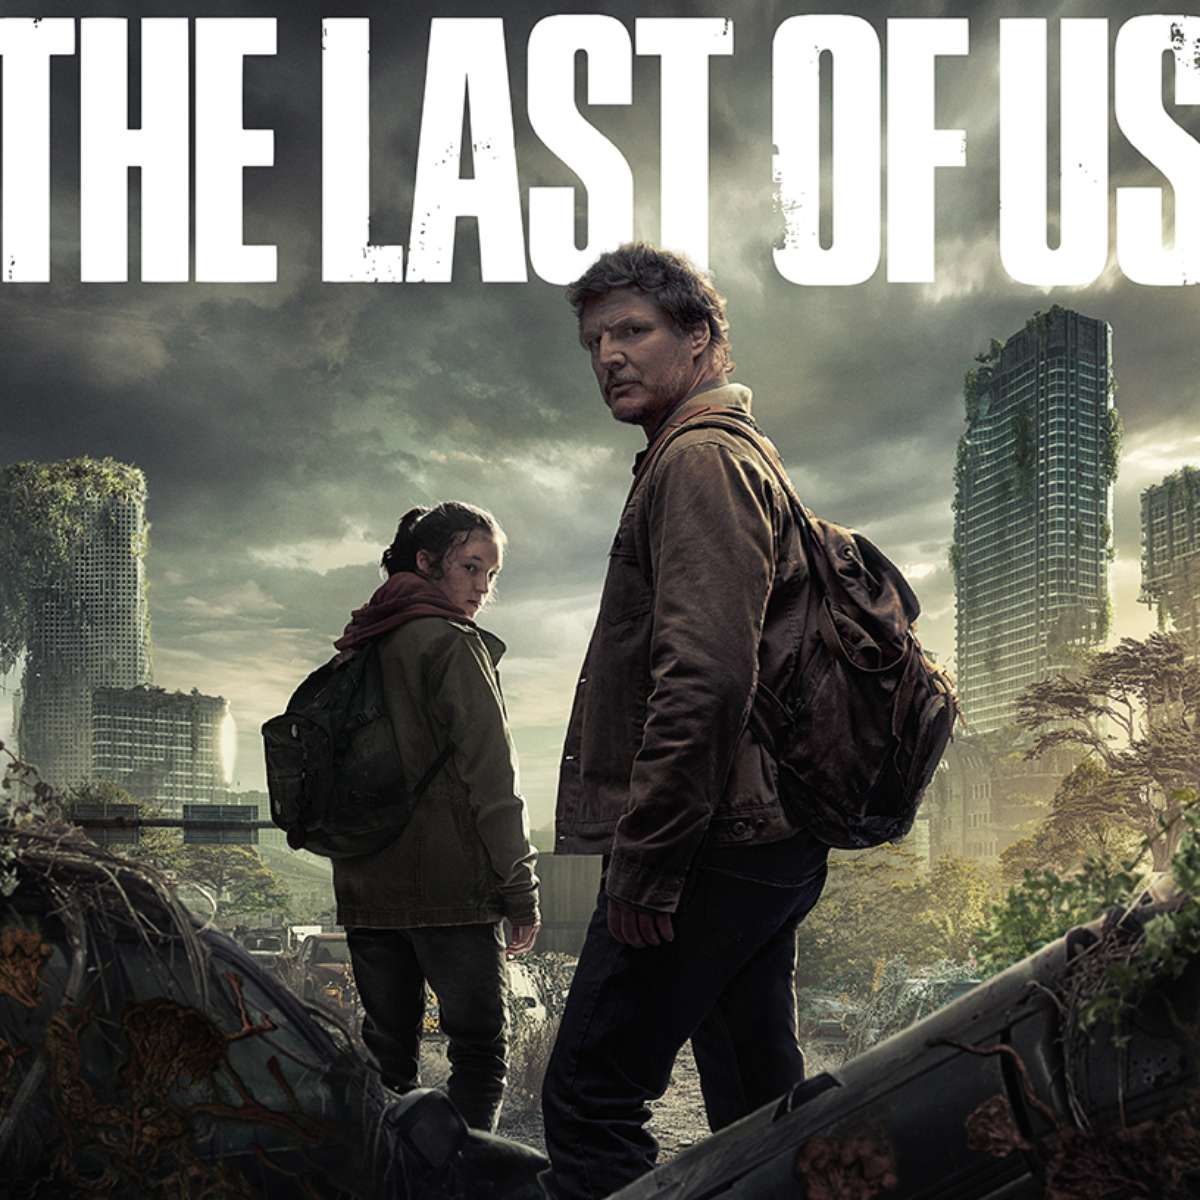 Troy Baker gostaria de retornar como Joel em The Last of Us Part 3